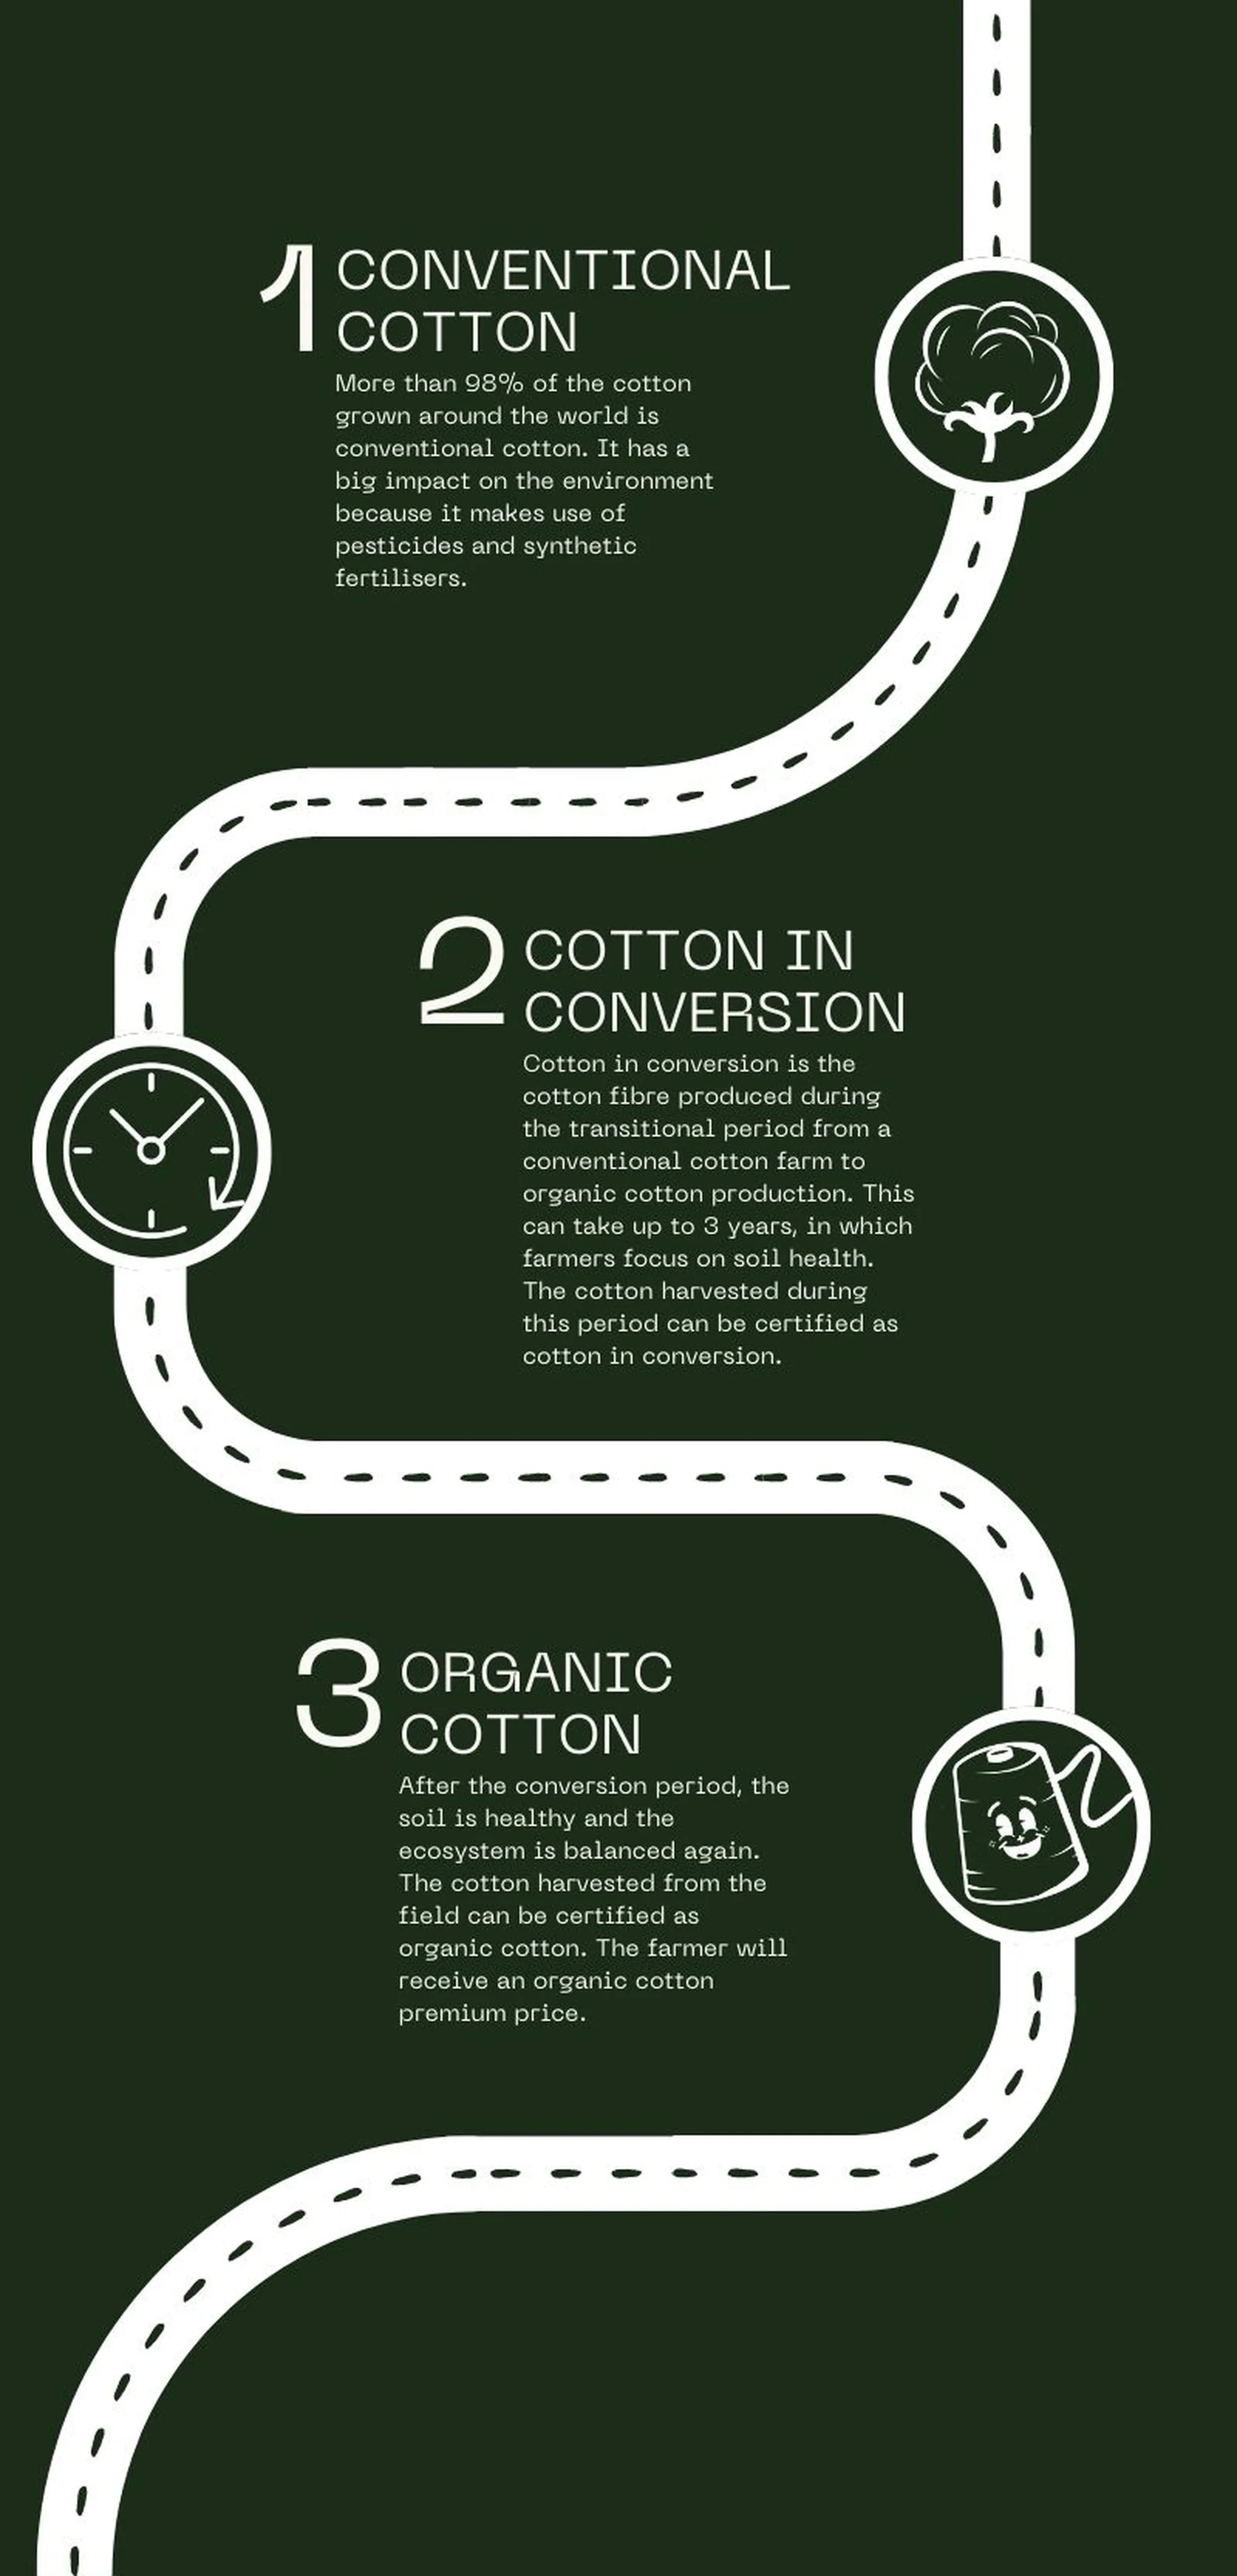 https://a.storyblok.com/f/180781/800x1666/d24b0e0d6f/cotton-in-conversion-infographic-finalfinal.png